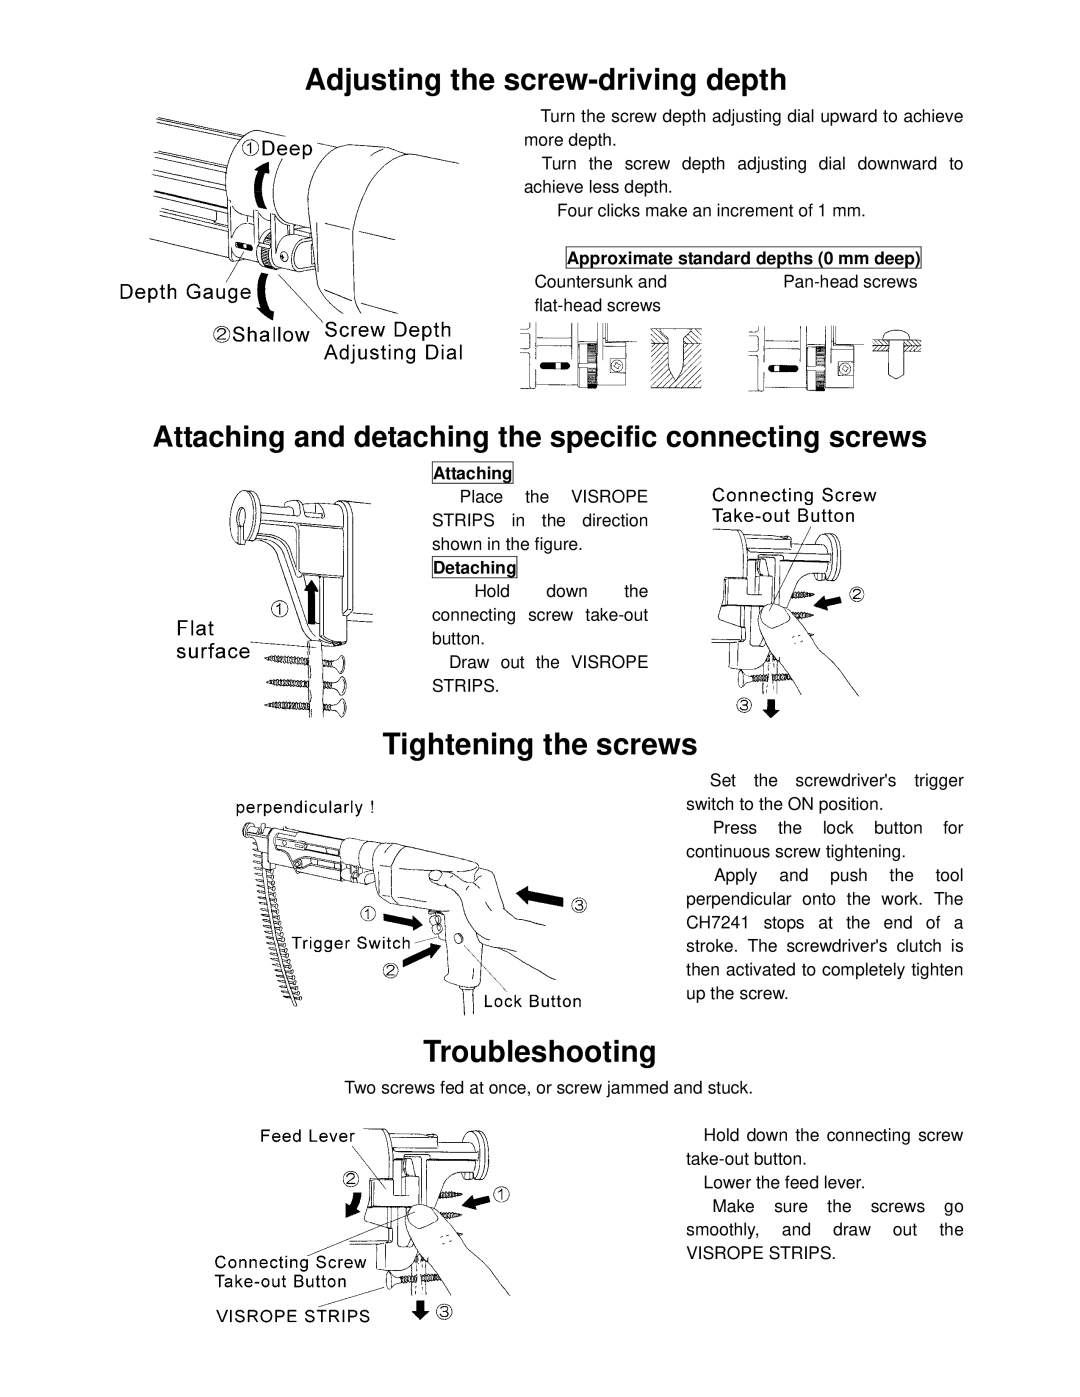 MURO CH7241U manual Adjusting the screw-driving depth, Tightening the screws, Troubleshooting 